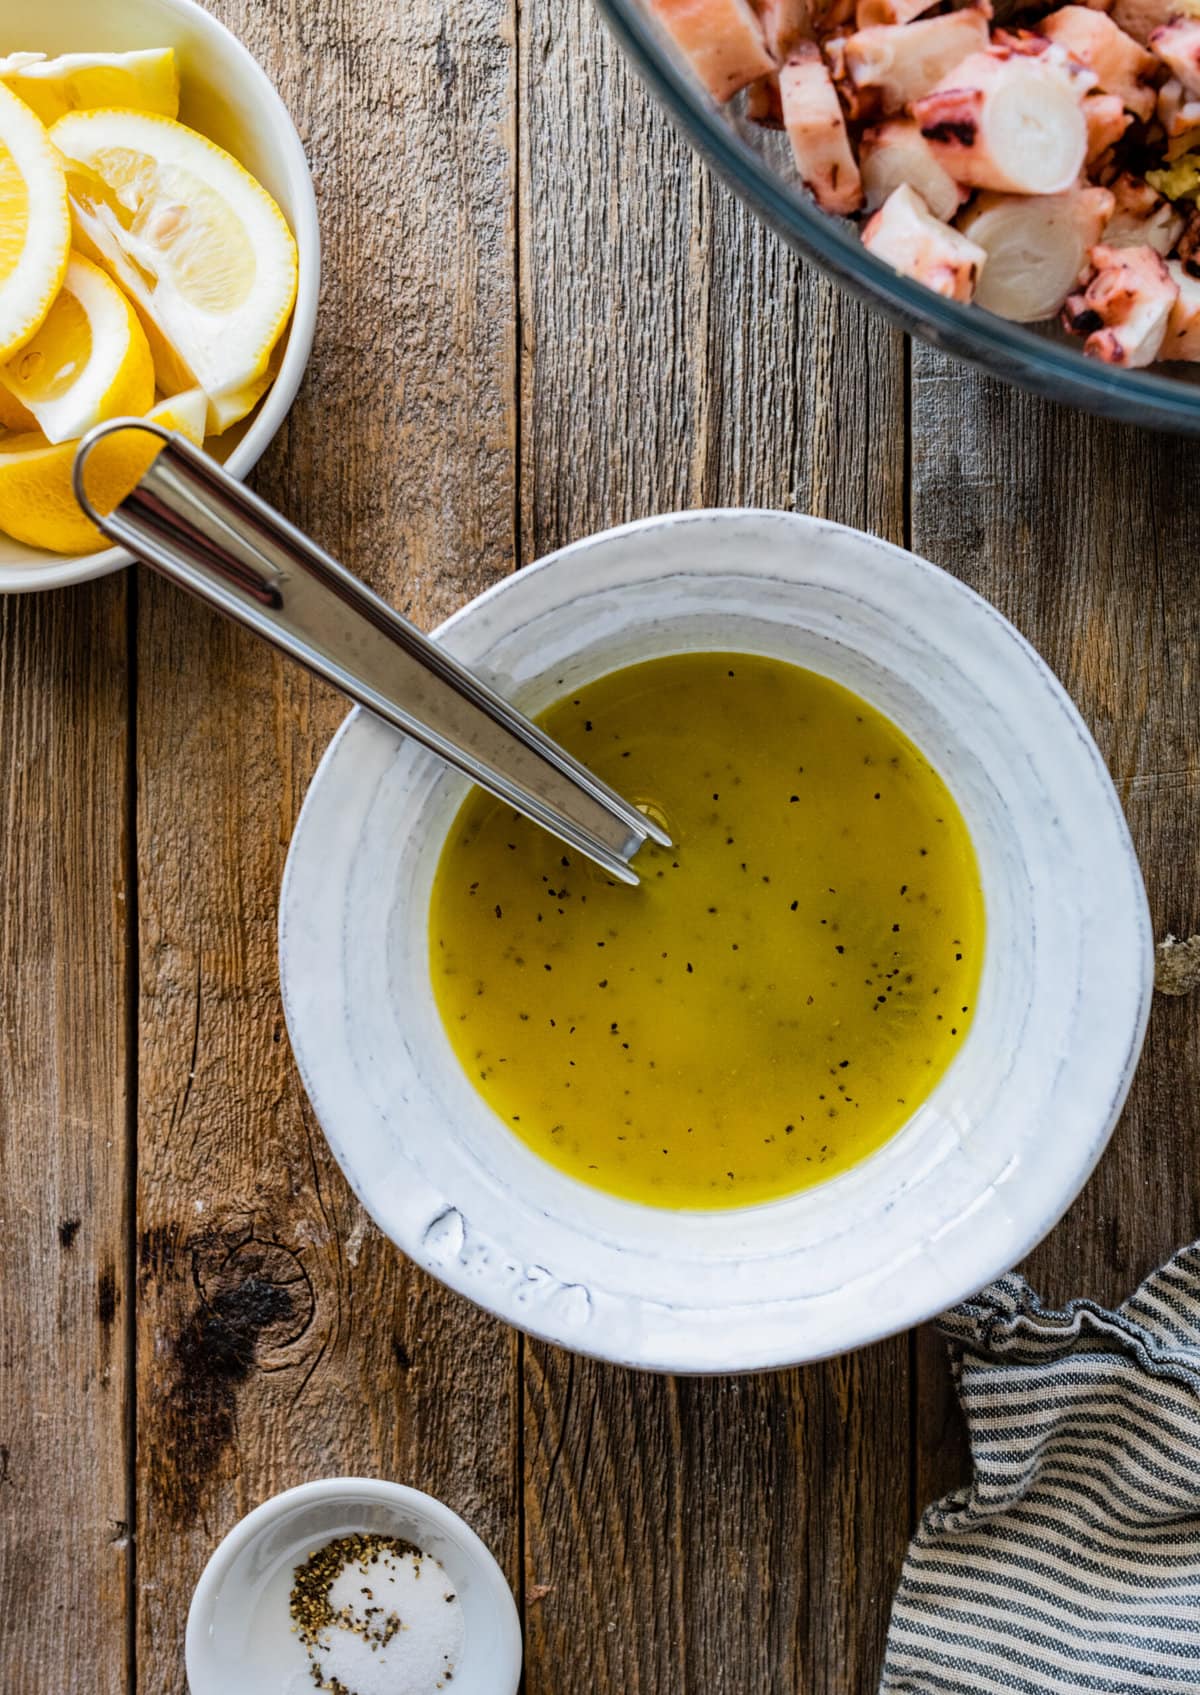 How to Make-Italian Octopus Salad Recipe with potatoes- make the olive oil vinaigrette.